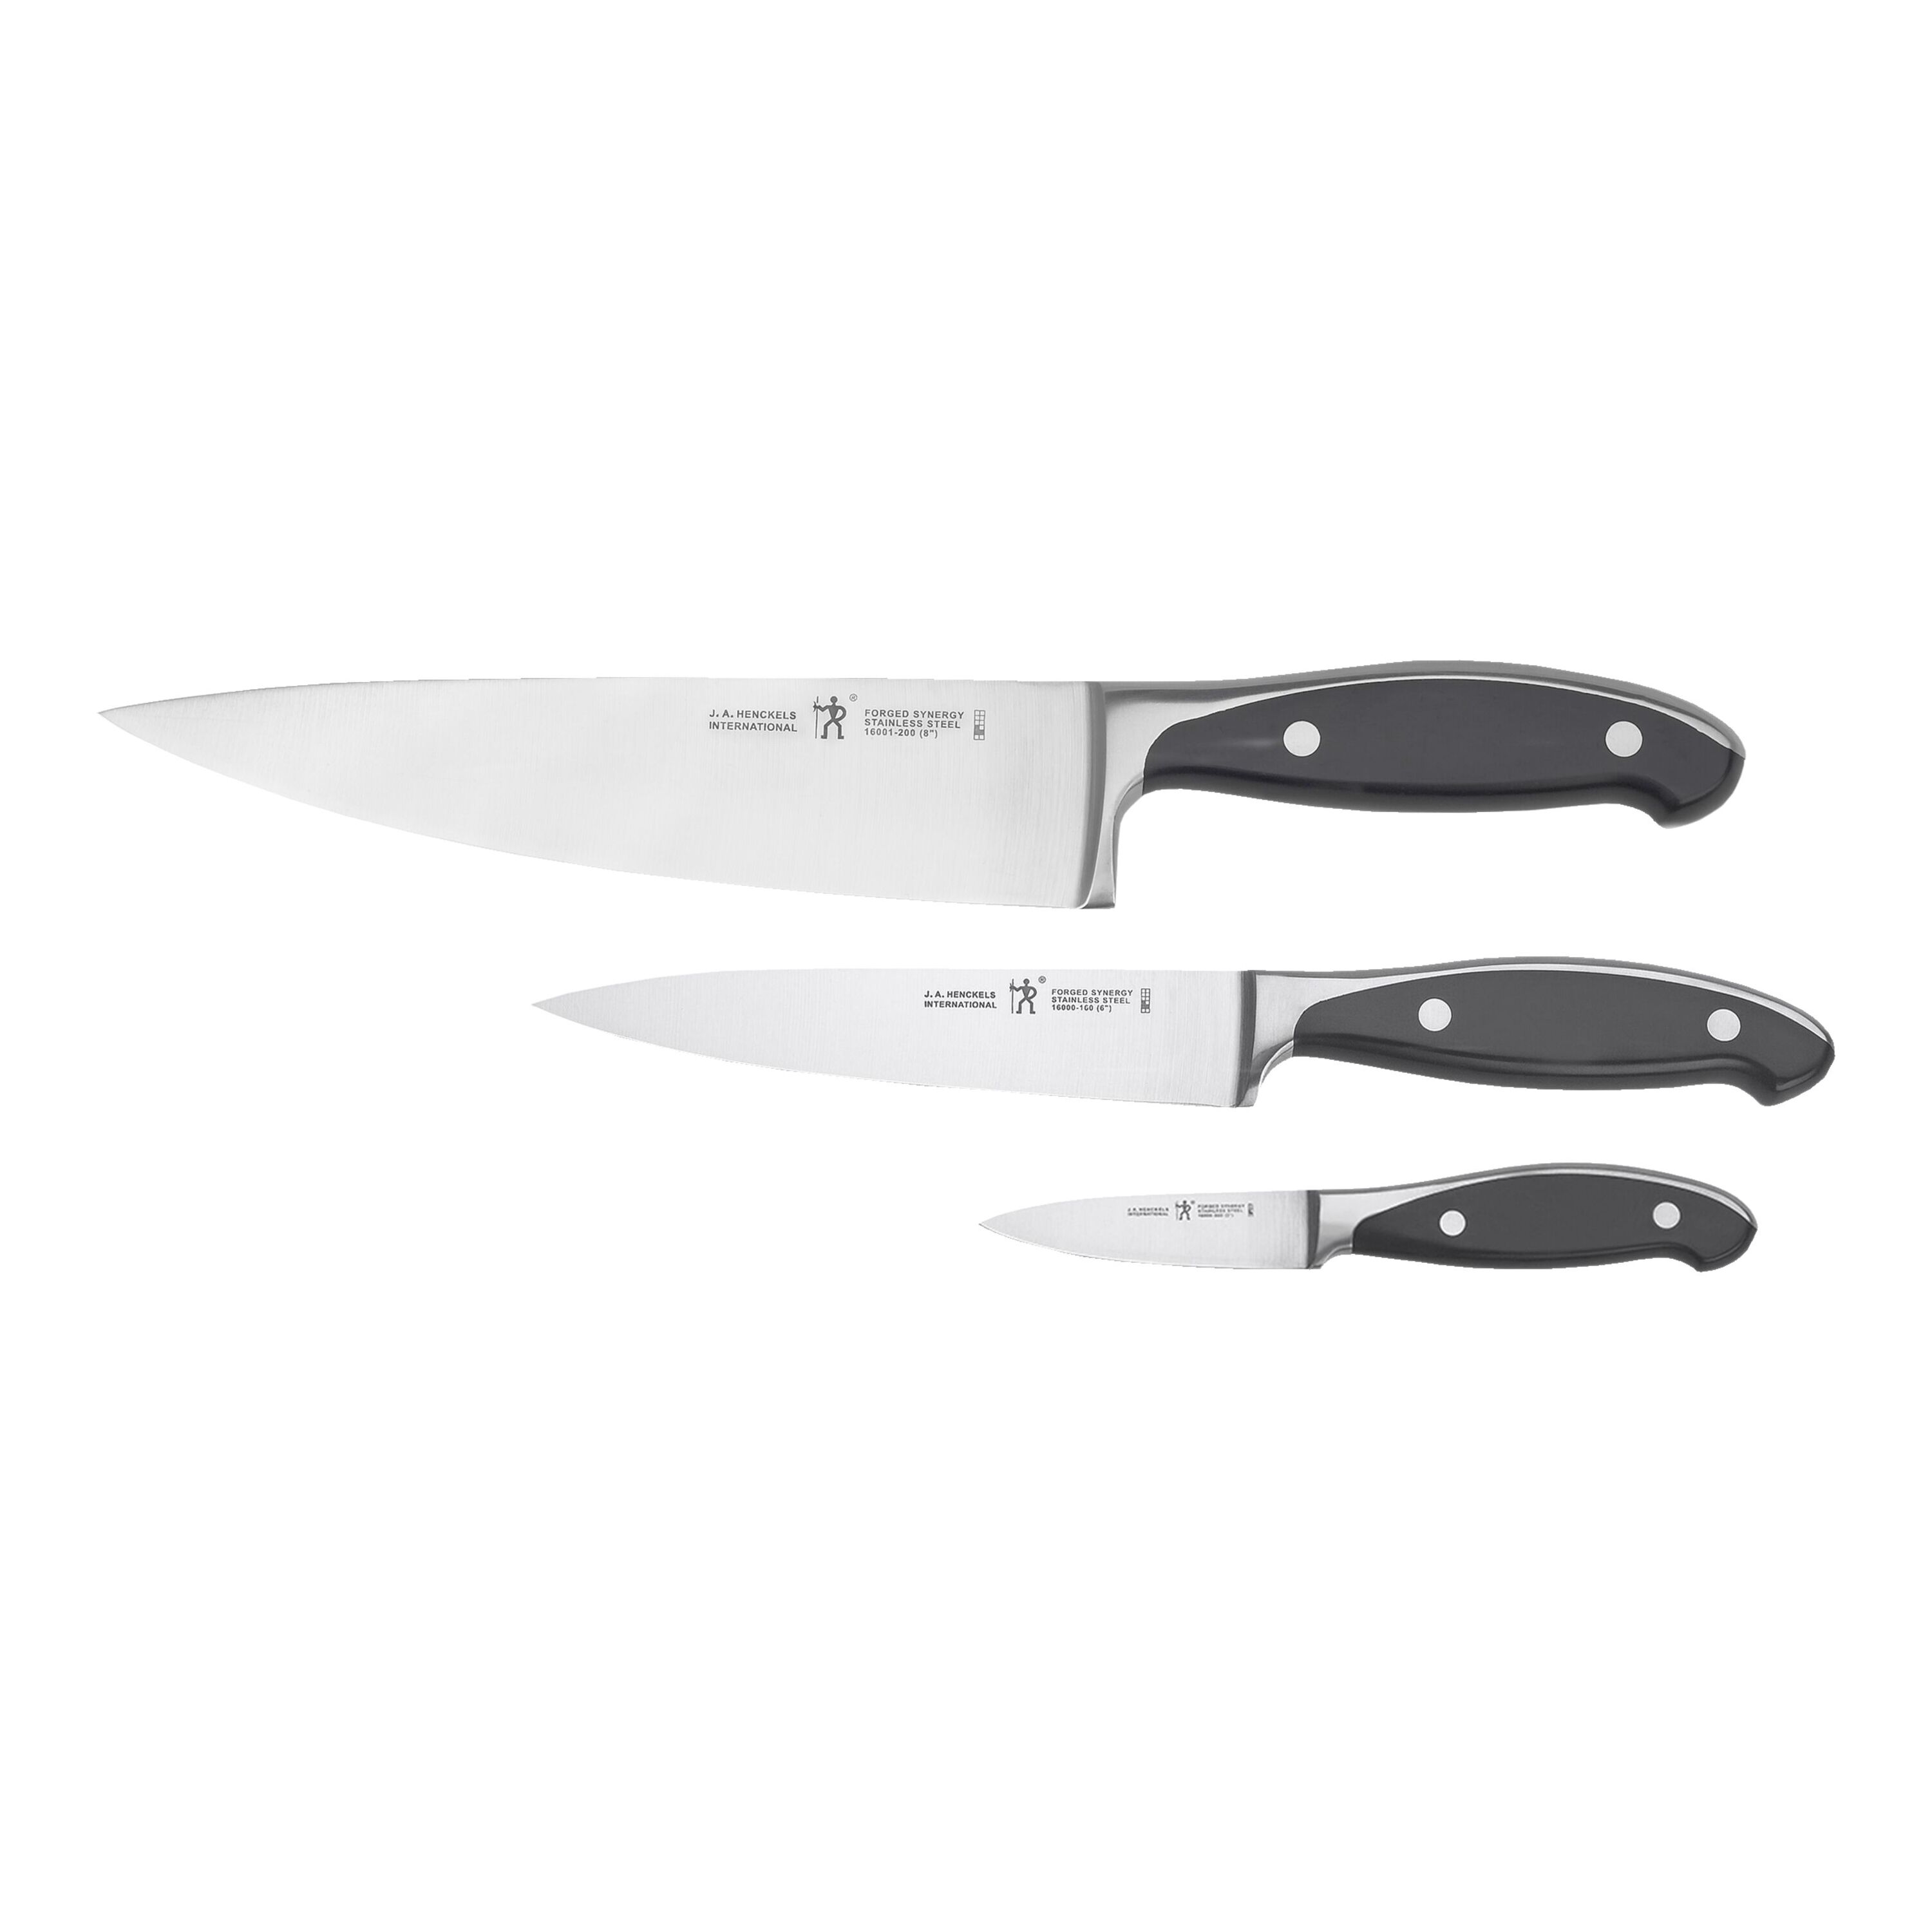 Henckels Dynamic 3-pc Starter Knife Set 